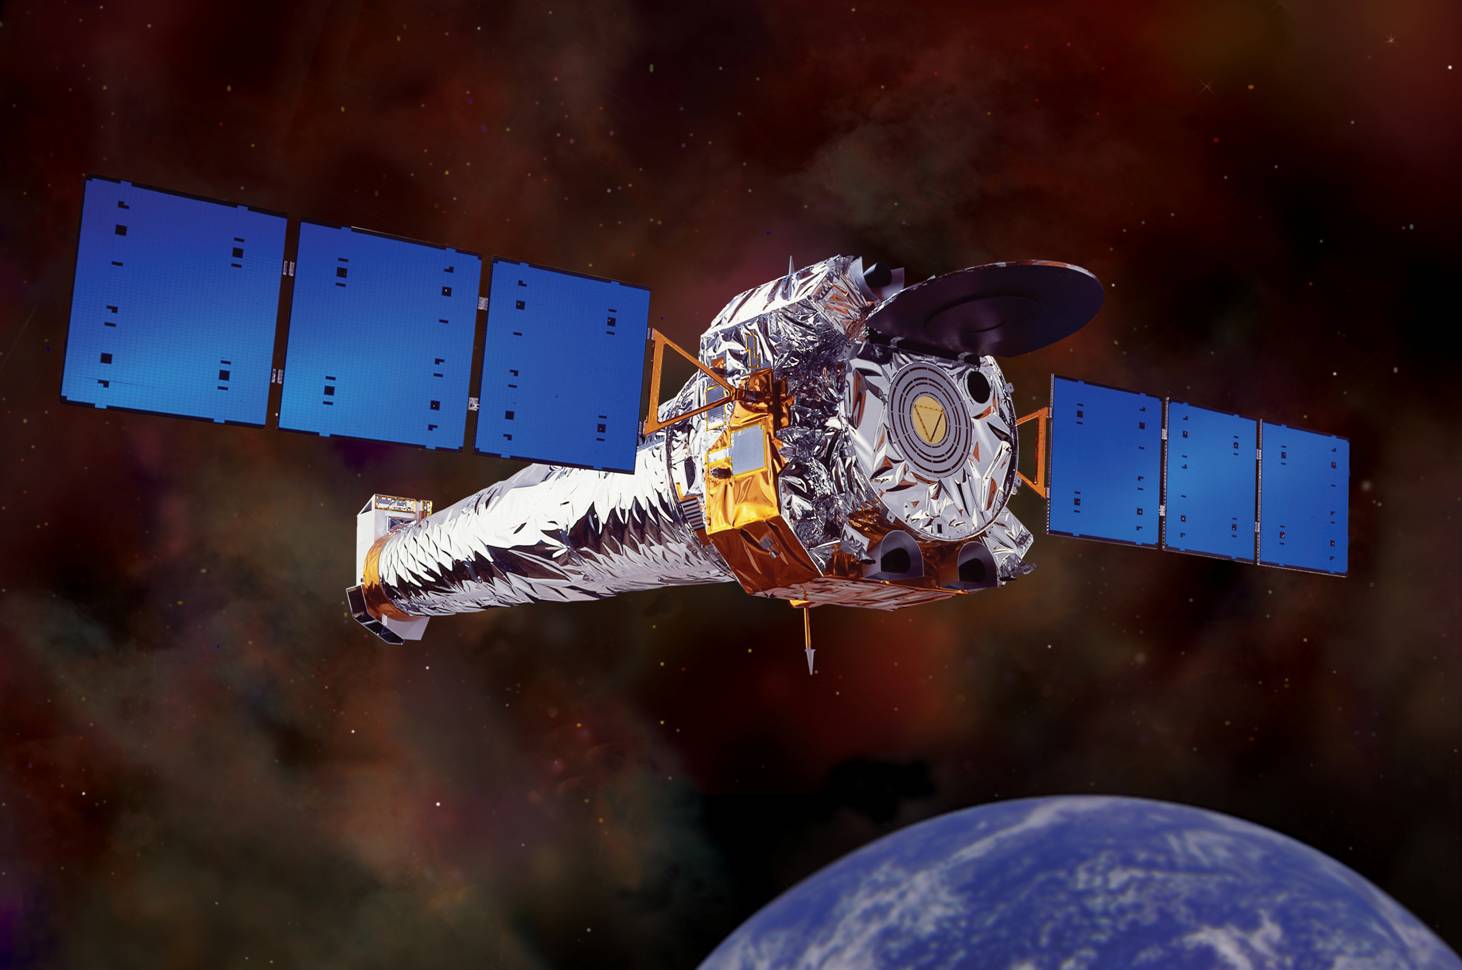 NASA image of Chandra space telescope posted on AmericaSpace « AmericaSpace